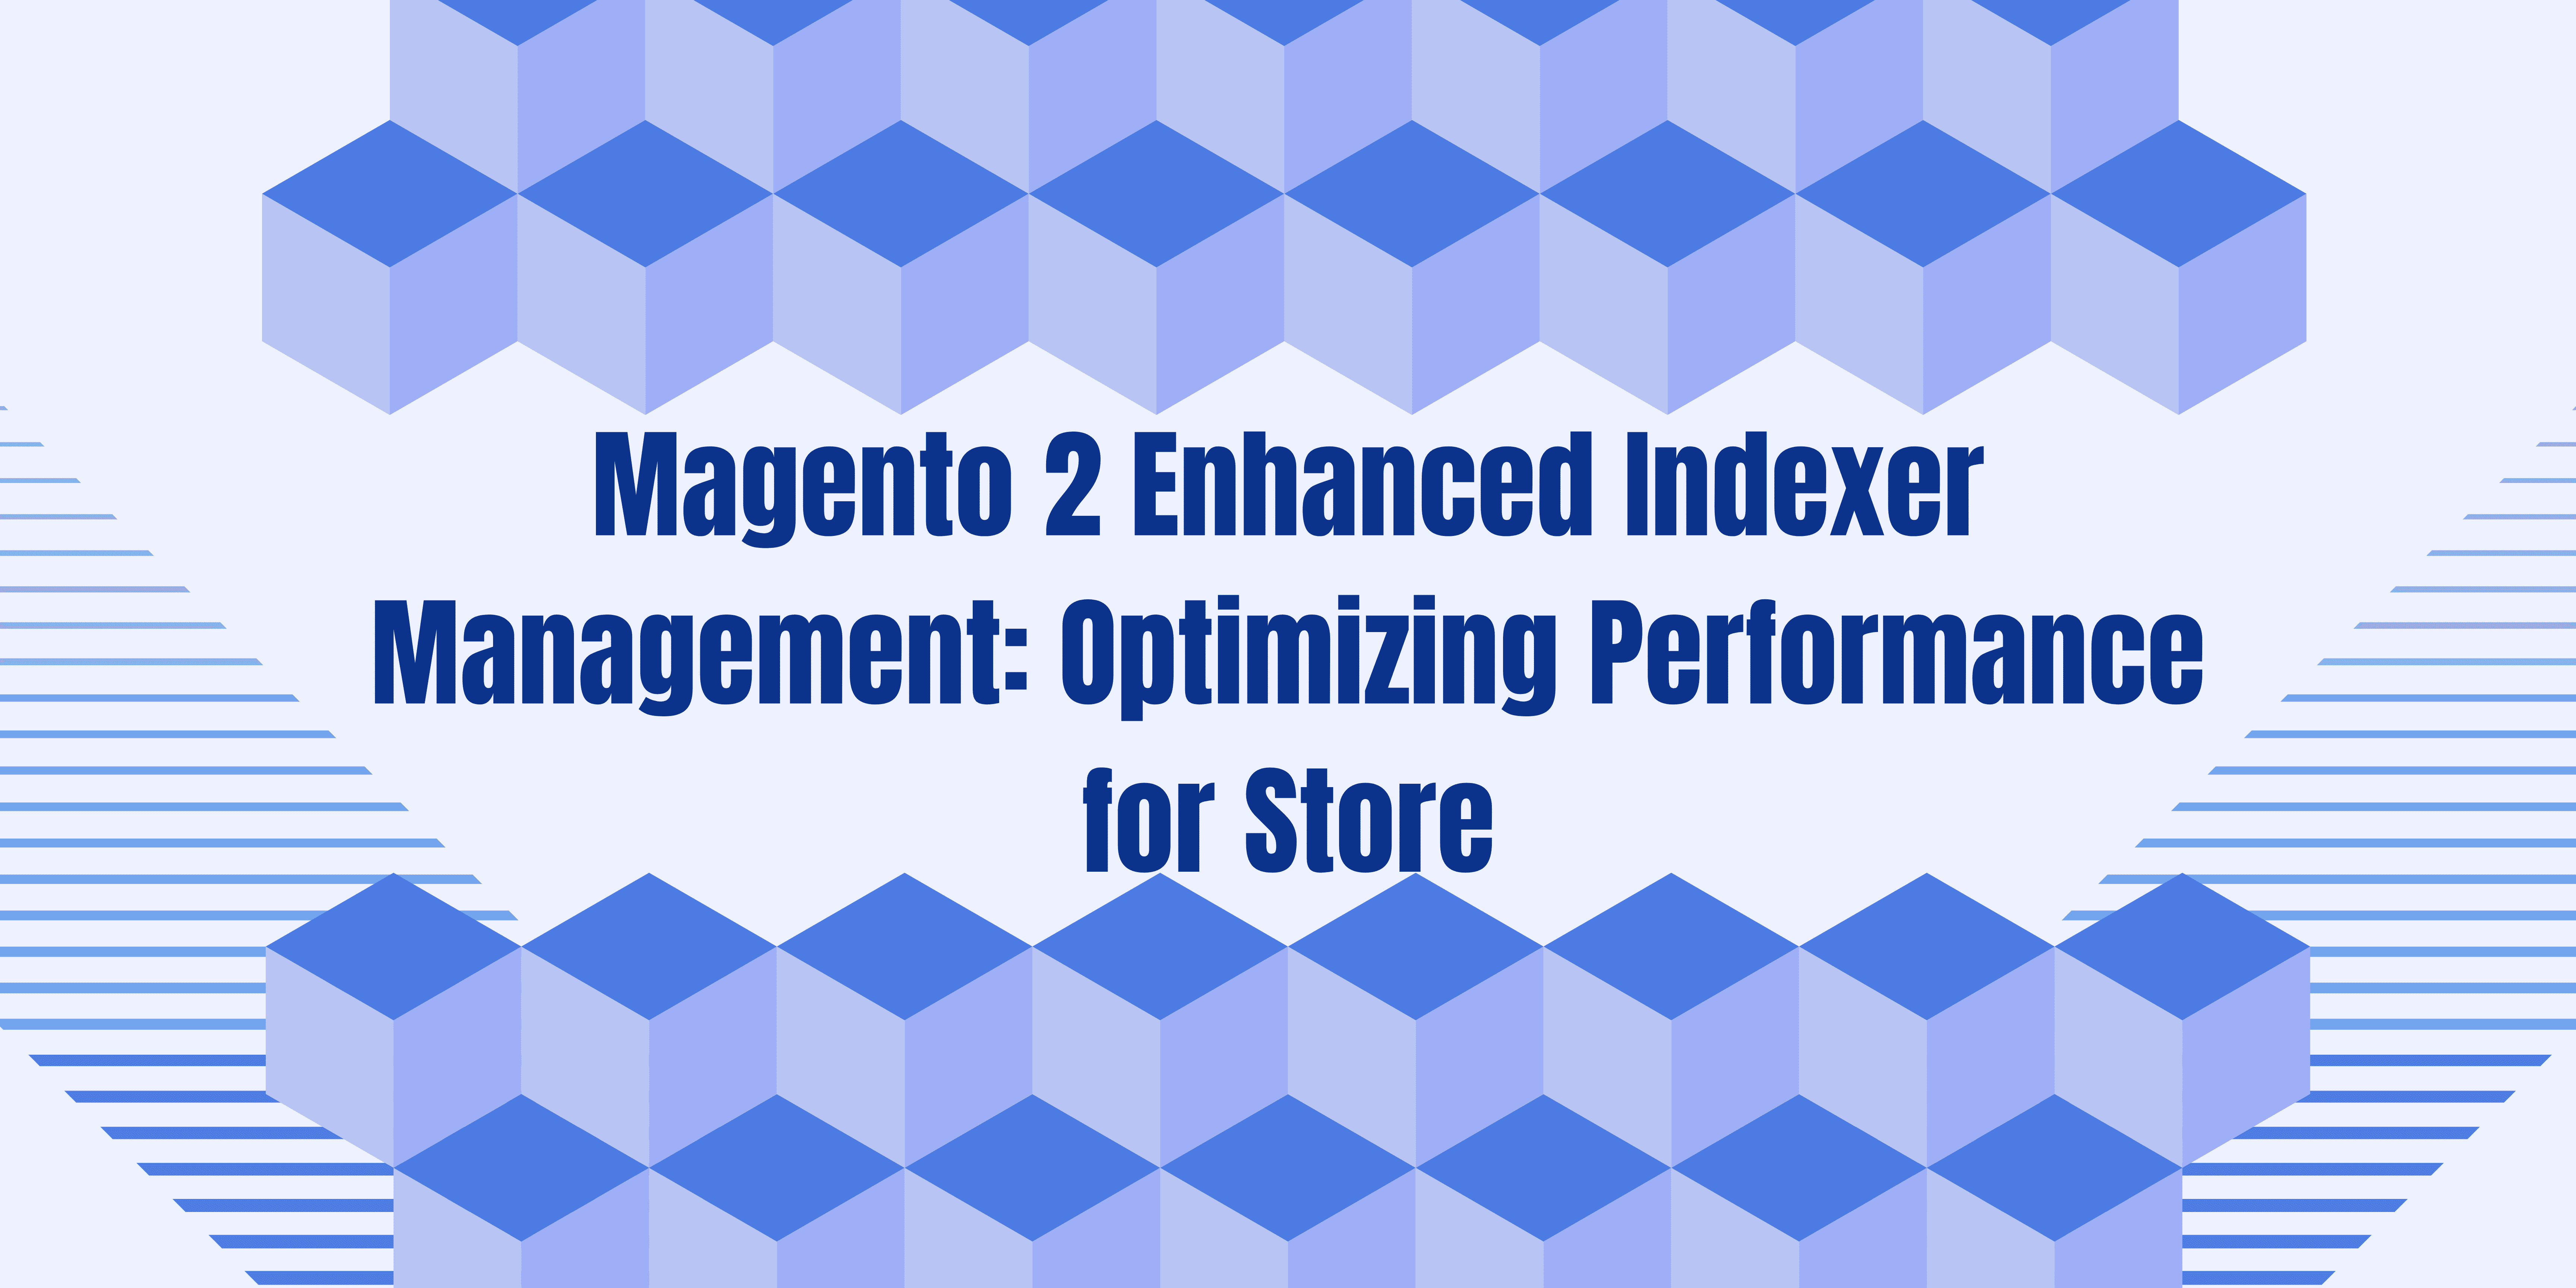 Magento 2 Enhanced Indexer Management: Optimizing Performance for Store